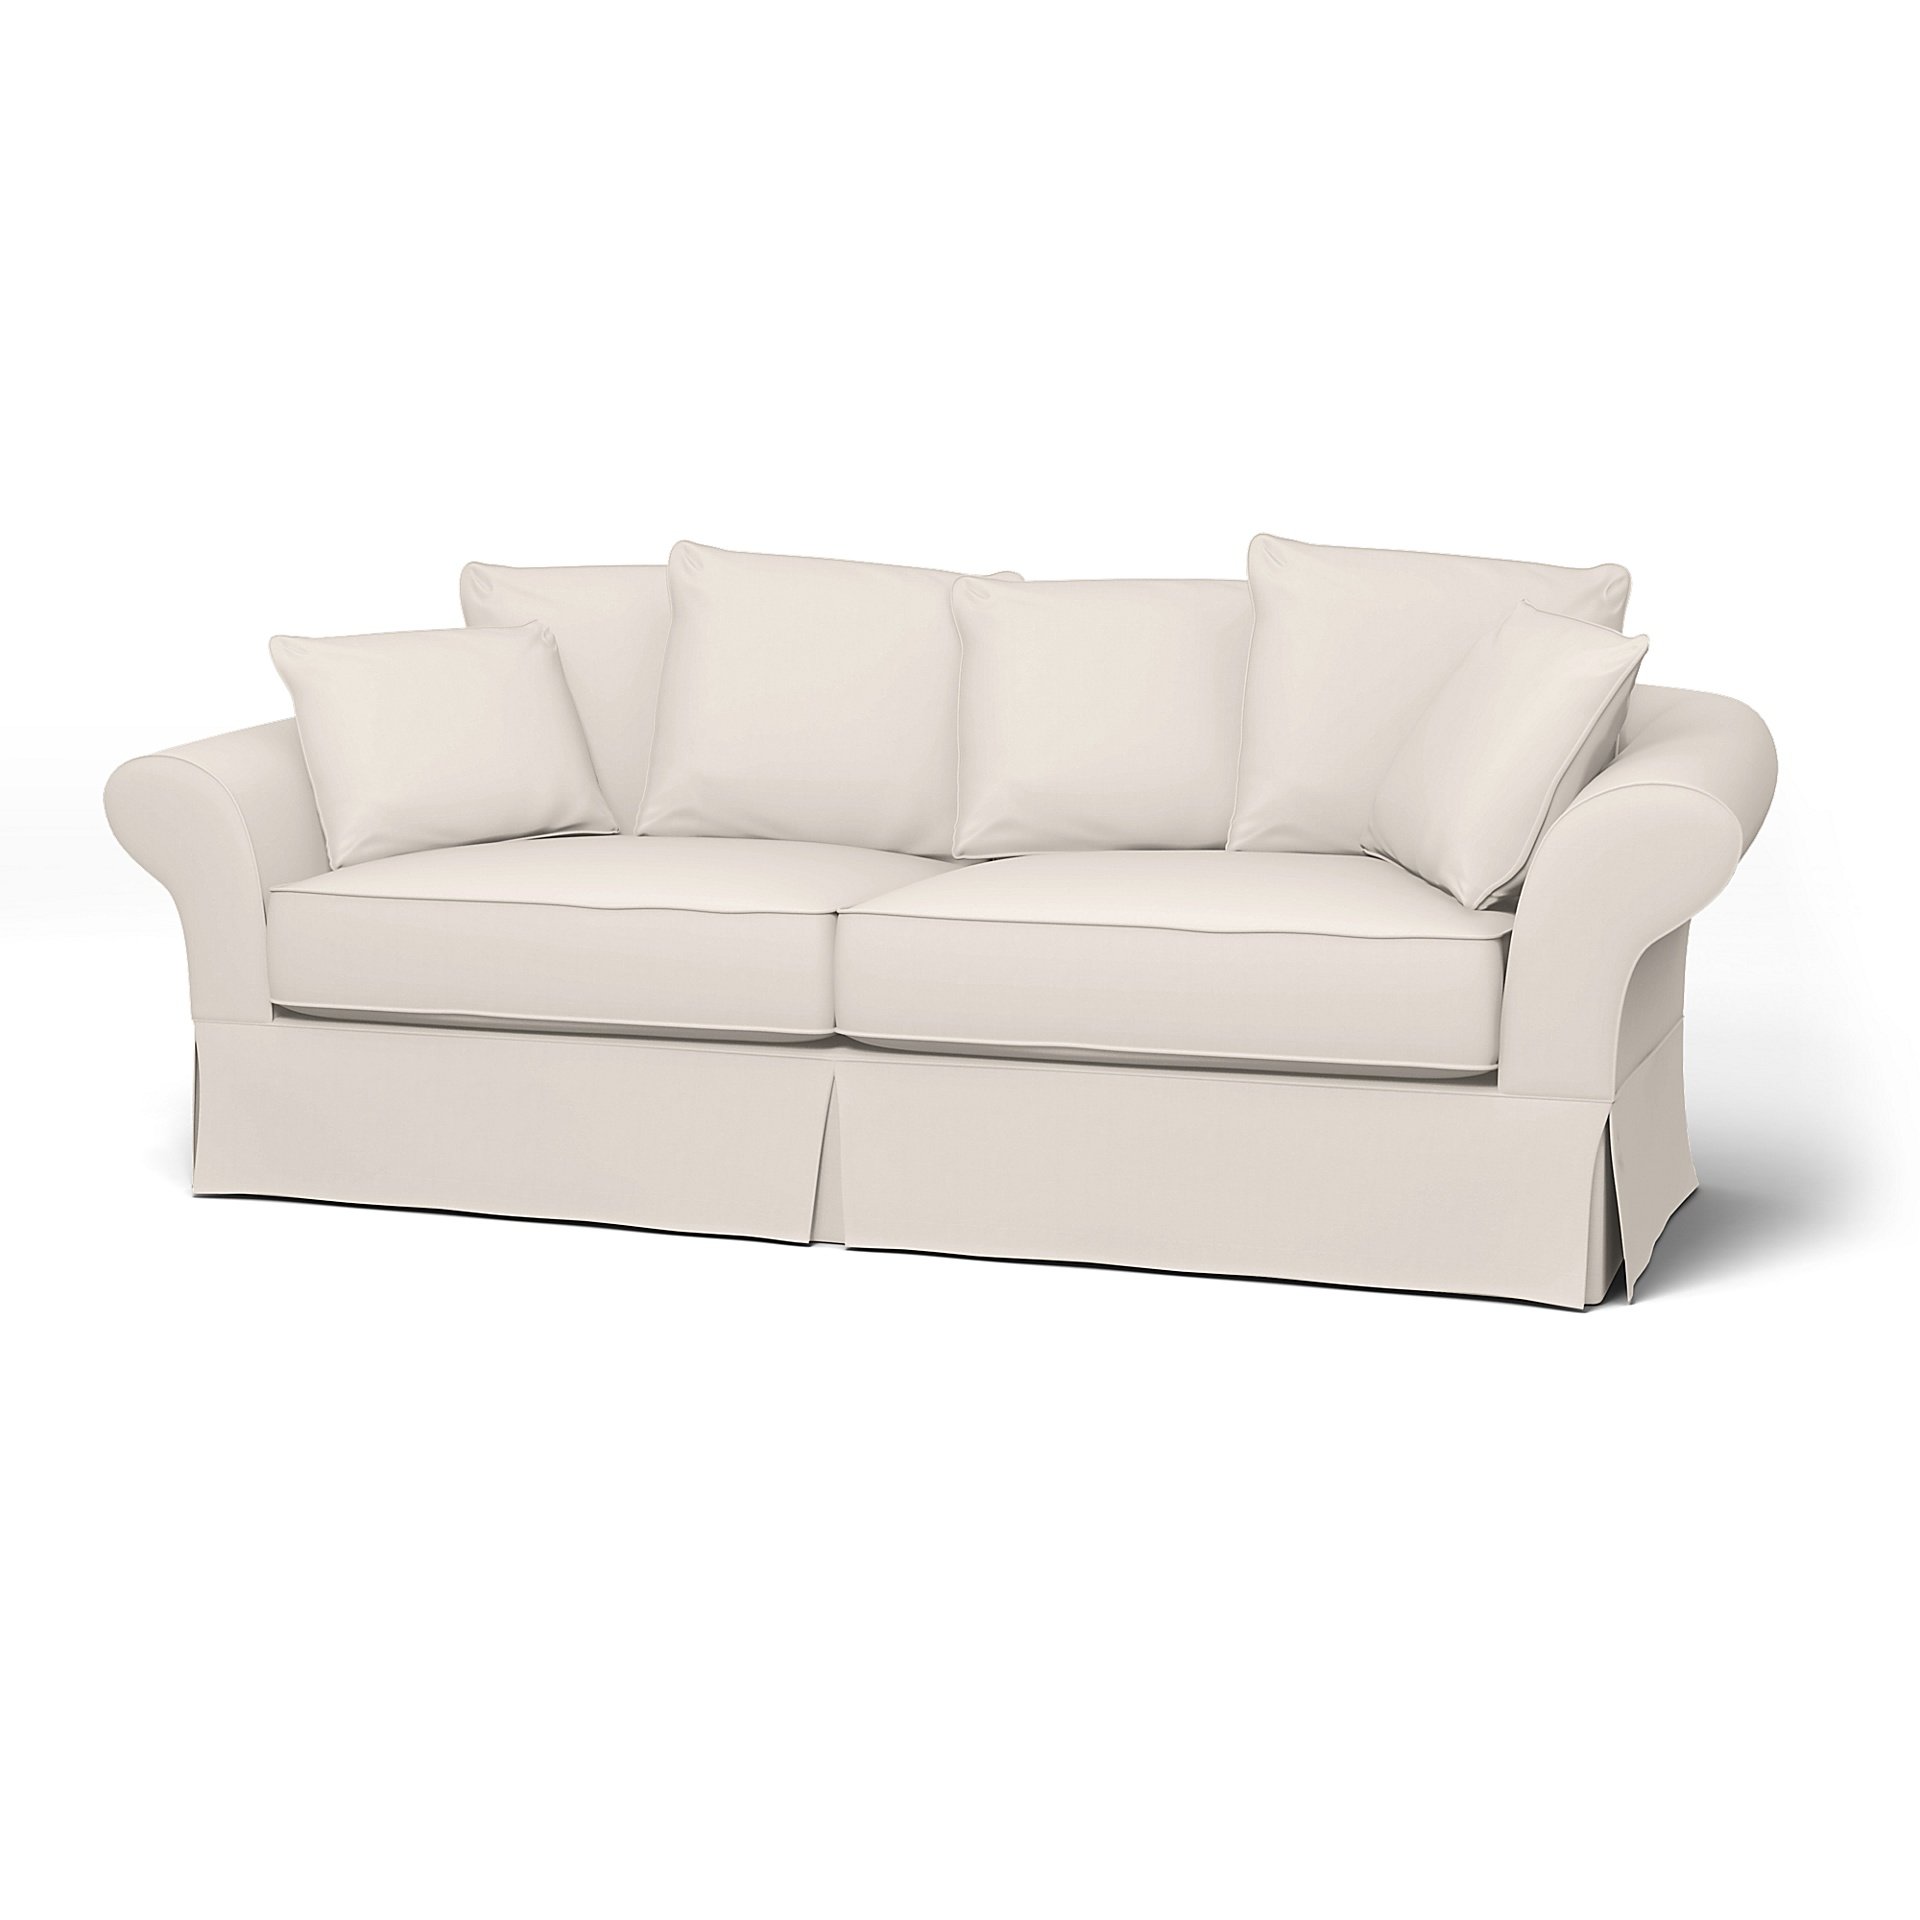 IKEA - Backamo 3 Seater Sofa Cover, Soft White, Cotton - Bemz